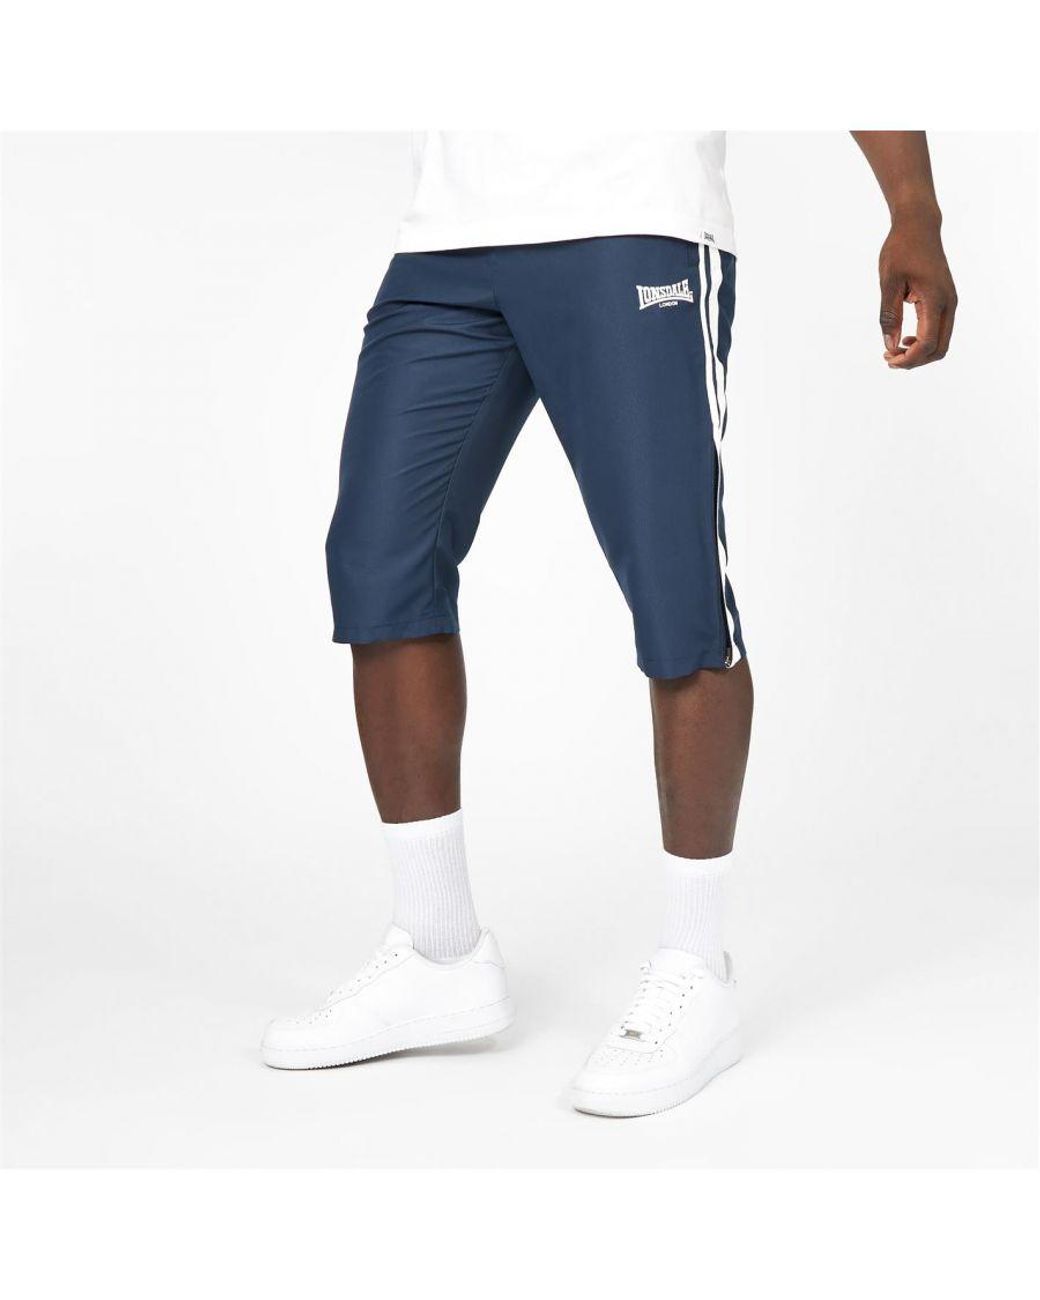 QWANG Men's Cargo Shorts 3/4 Relaxed Fit Below Knee Capri Cargo Pants  Cotton - Walmart.com